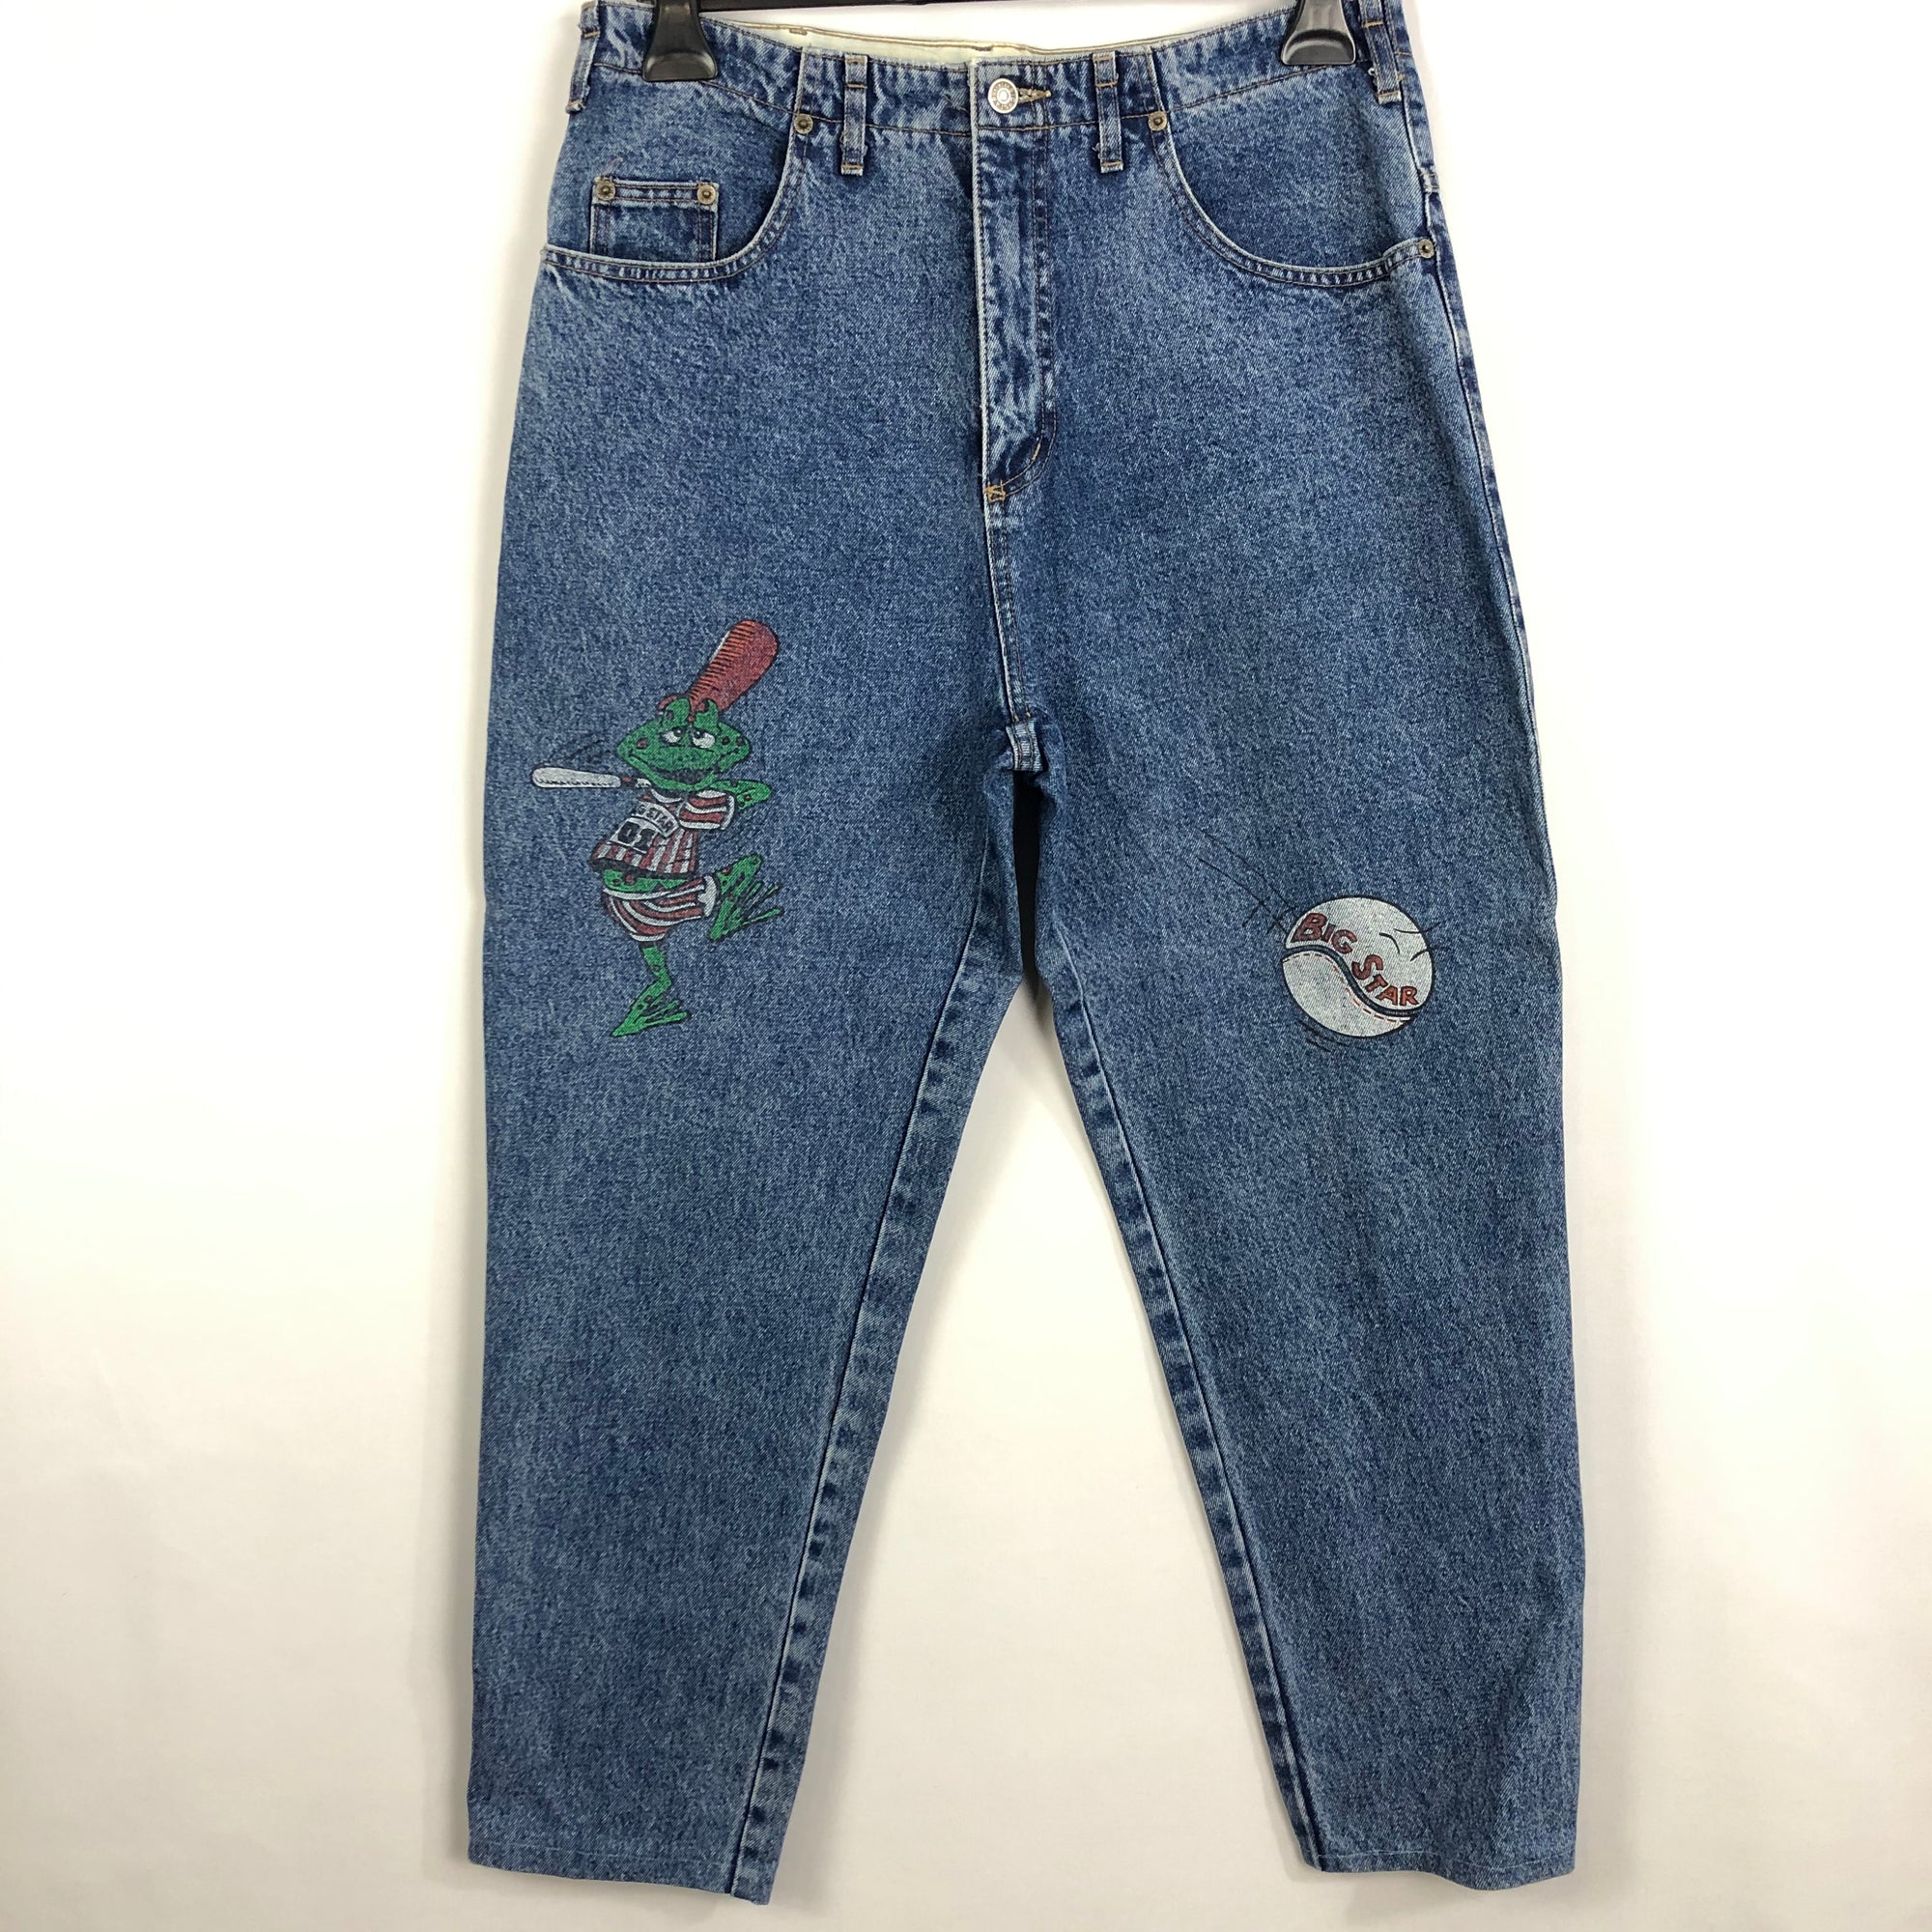 Vintage 90s Big Star Graphic Jeans - W34